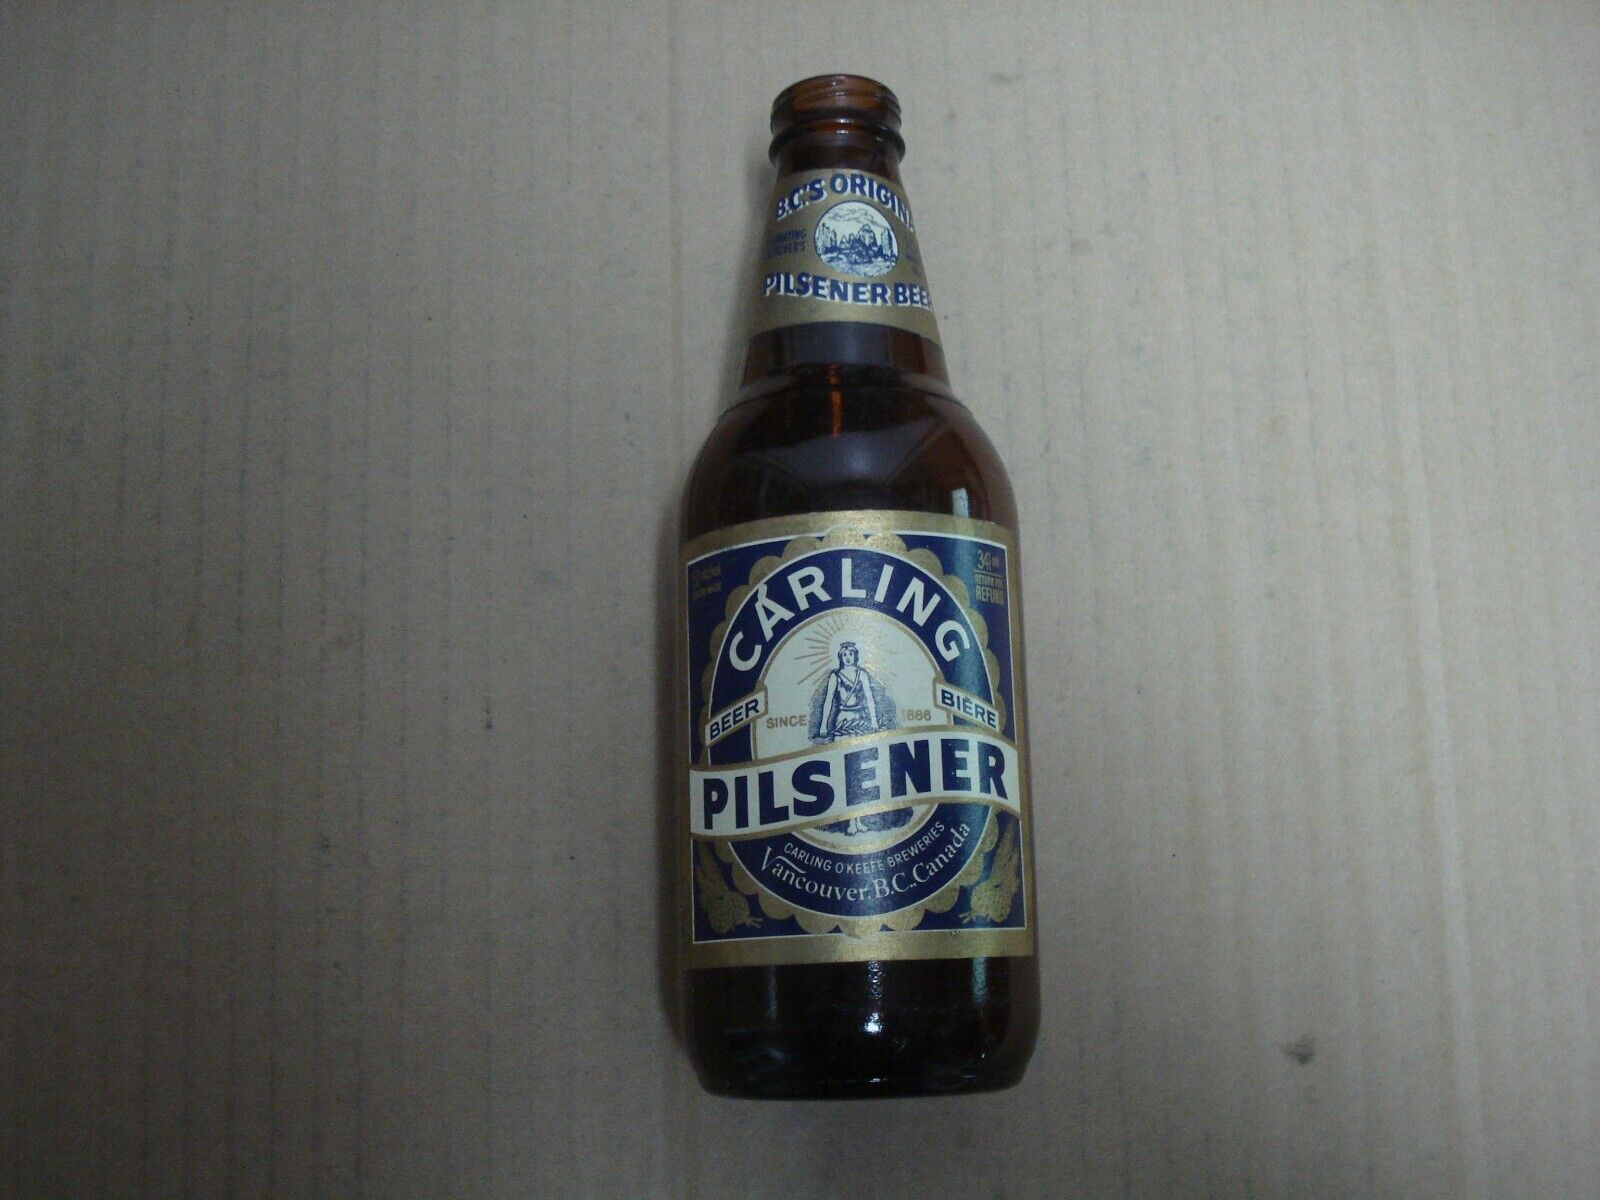 Carling Pilsener Vancouver, B.C. Beer Bottle